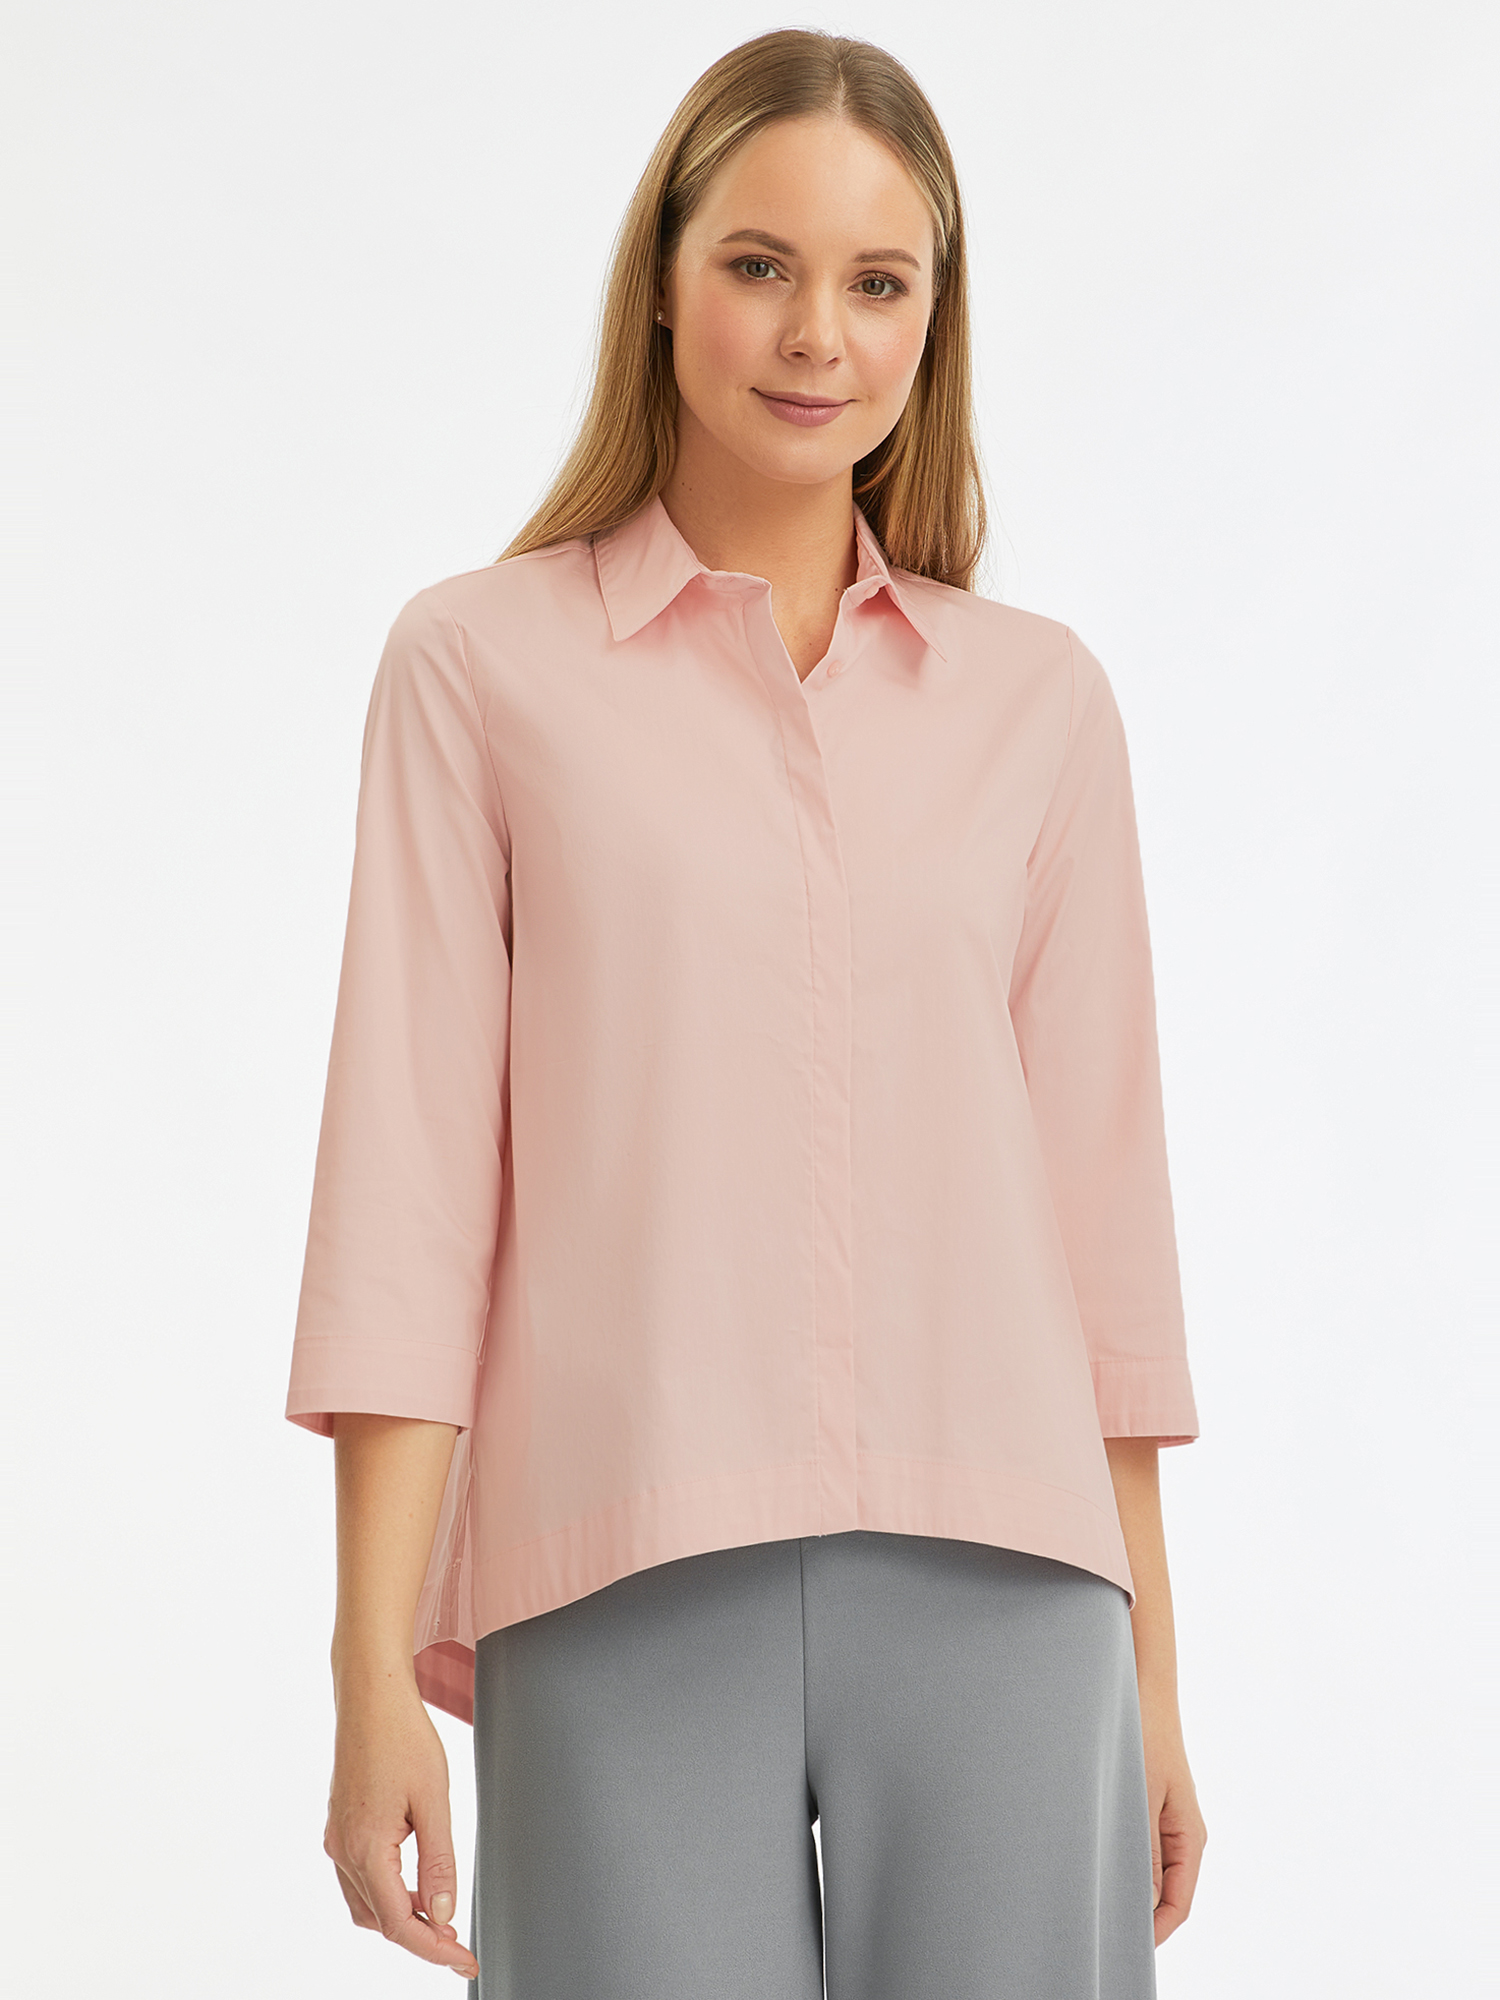 Рубашка женская oodji 13K11002-1B розовая 40